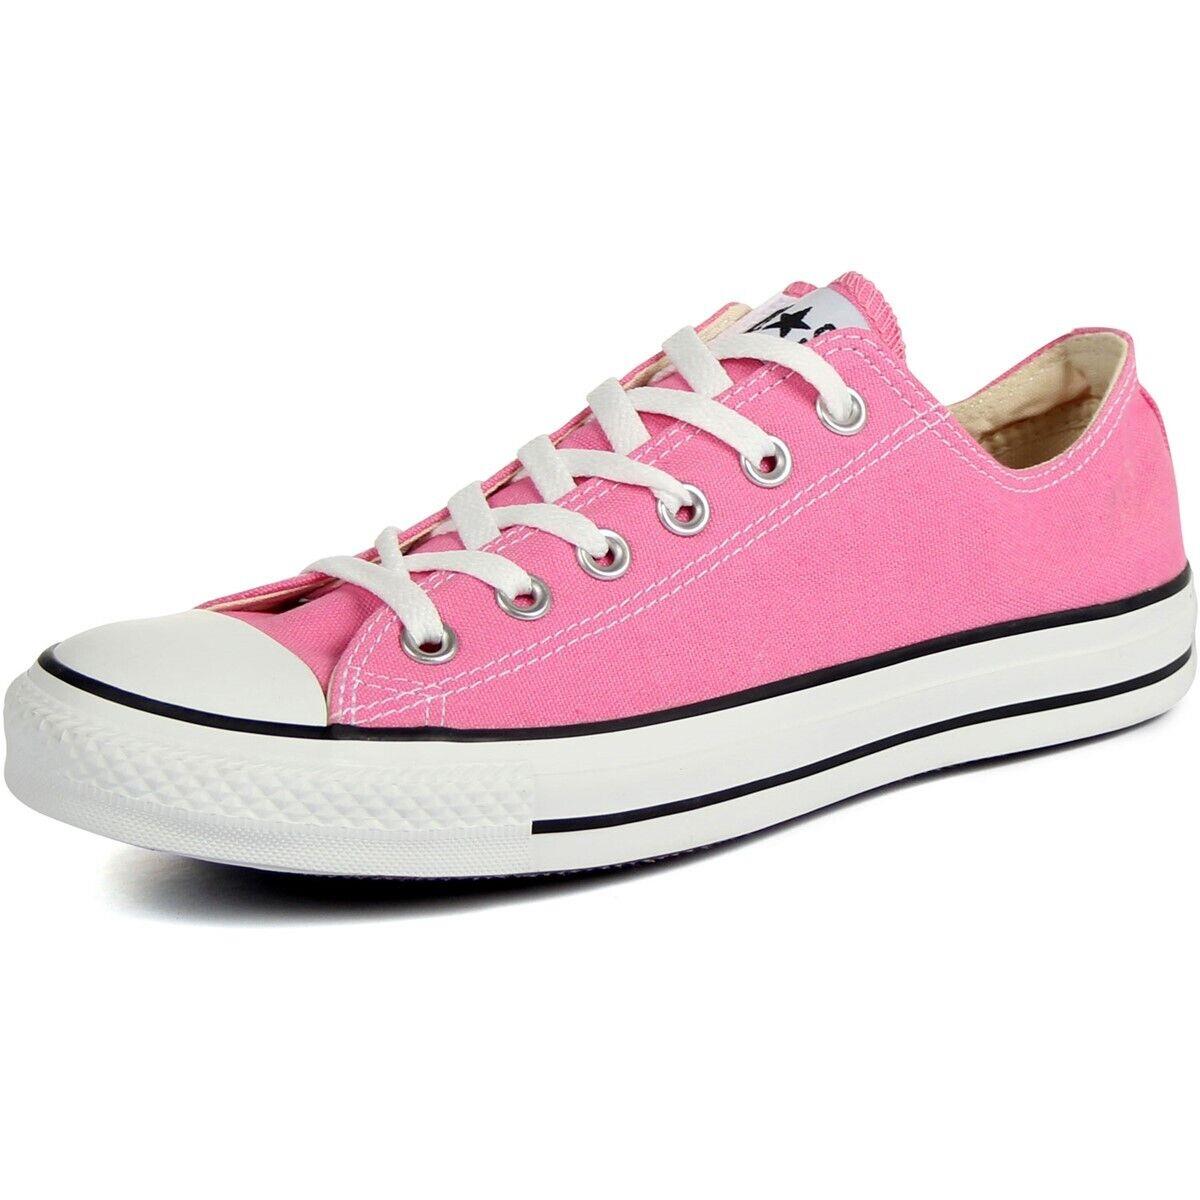 Converse All Star Chuck Taylor Shoes Canvas OX Men Women Pink M9007 Unisex - Pink